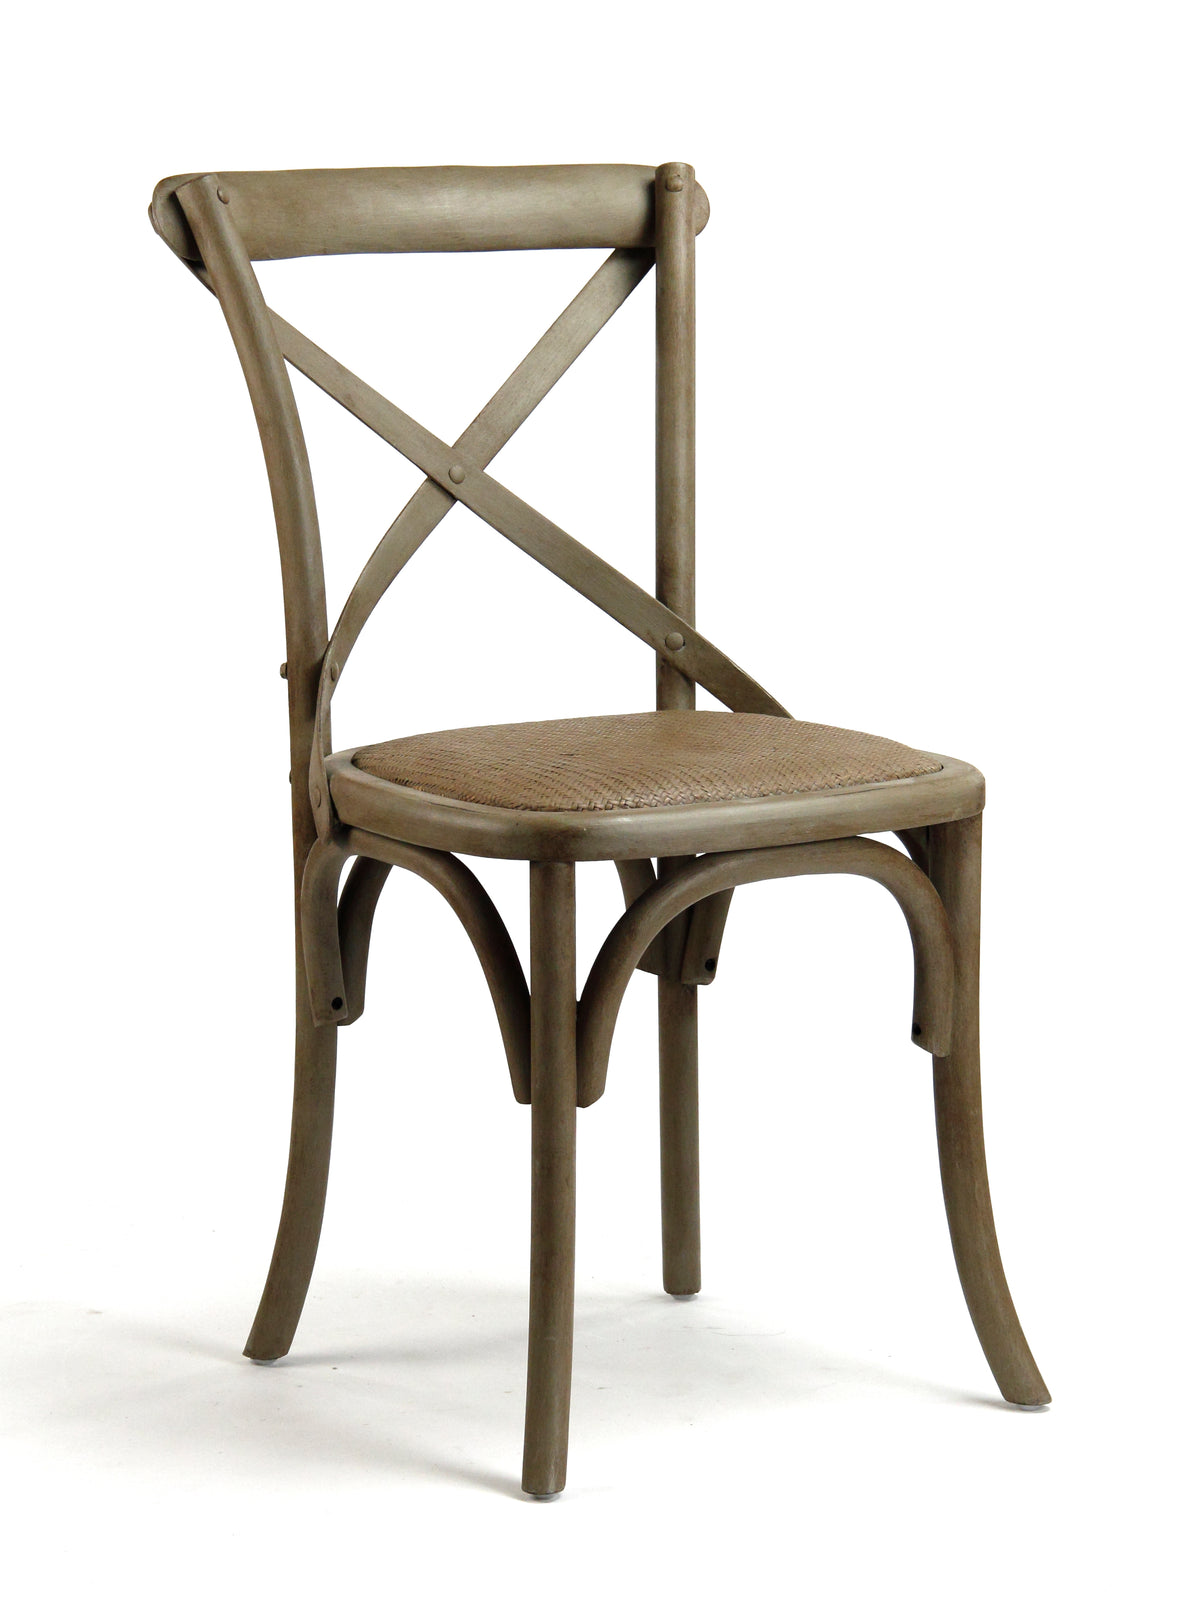 Parisienne Cafe Chair by Zentique